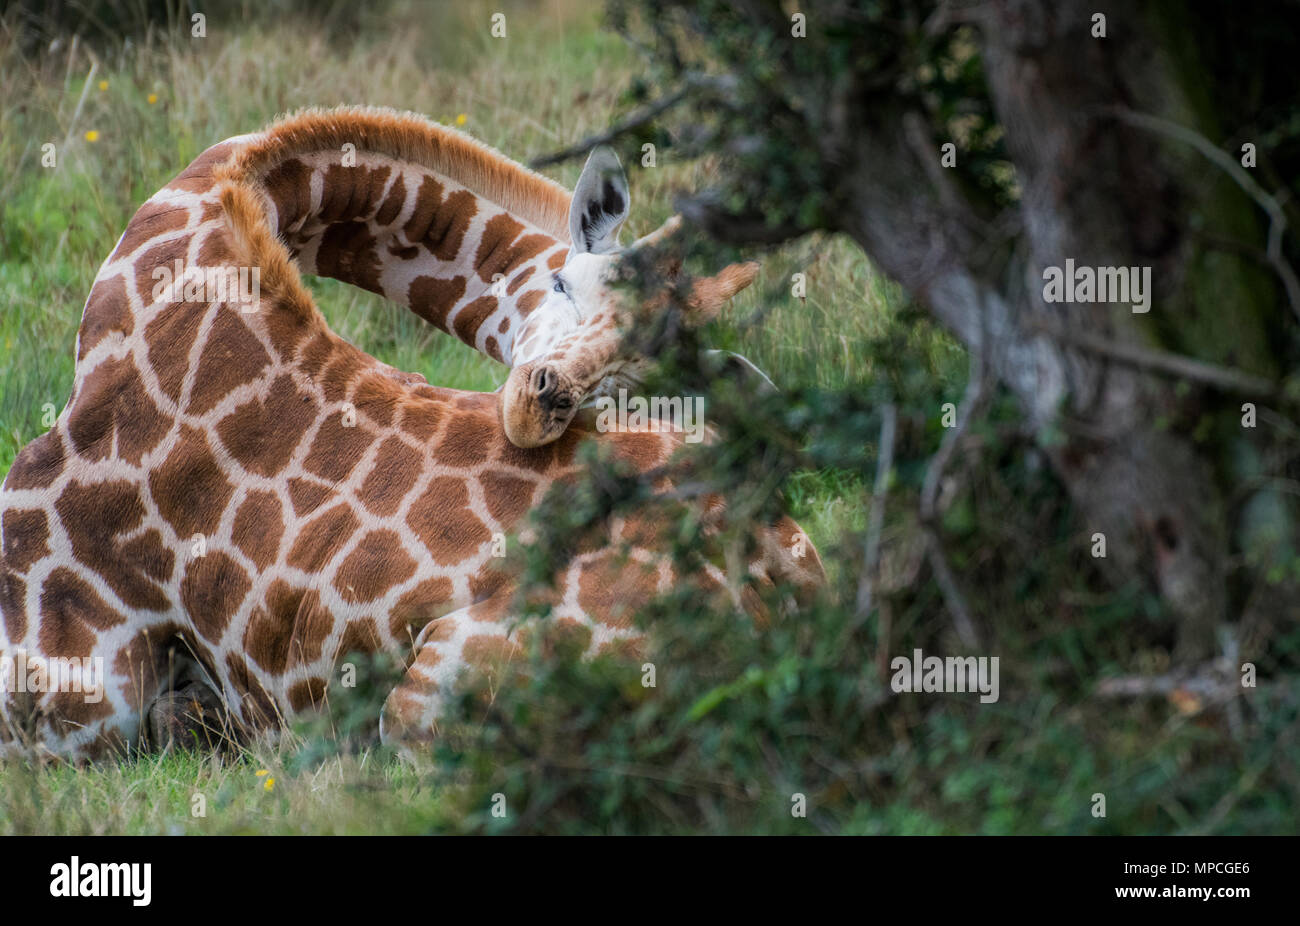 Un rare moment de la capture d'un girafe sauvage endormi Banque D'Images